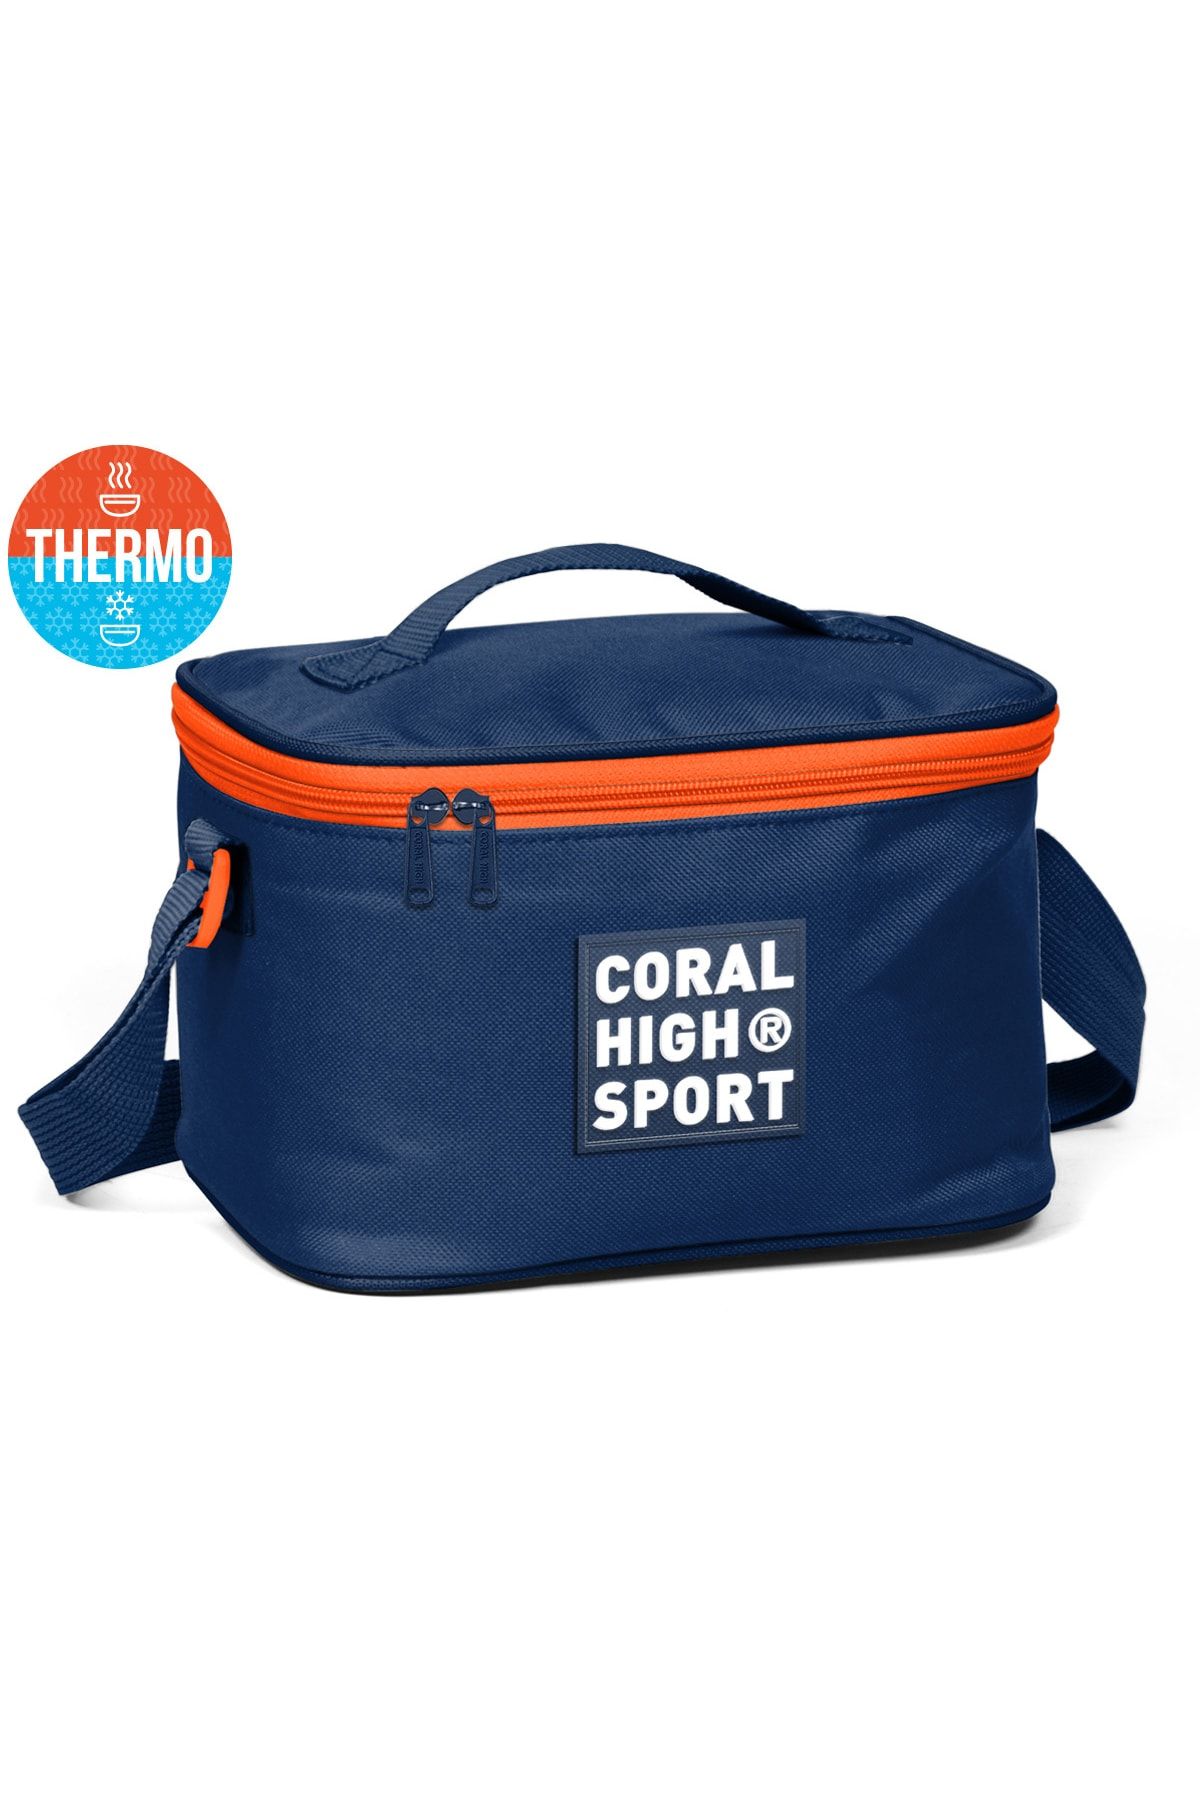 Coral High Sport Lacivert Neon Turuncu Thermo Beslenme Çantası 22806